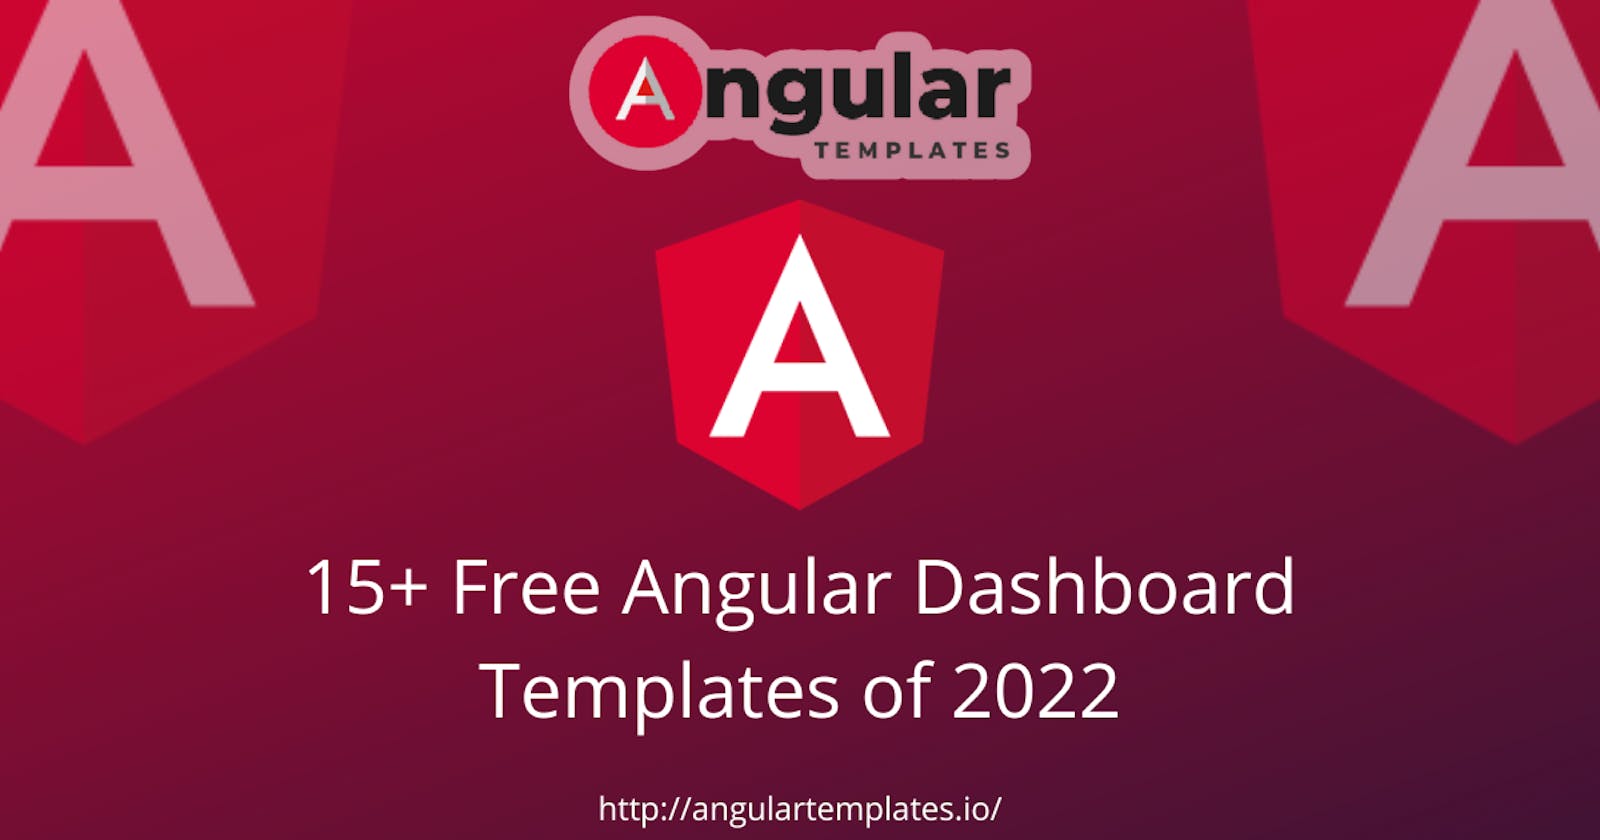 15+ Free Angular Dashboard Templates of 2022